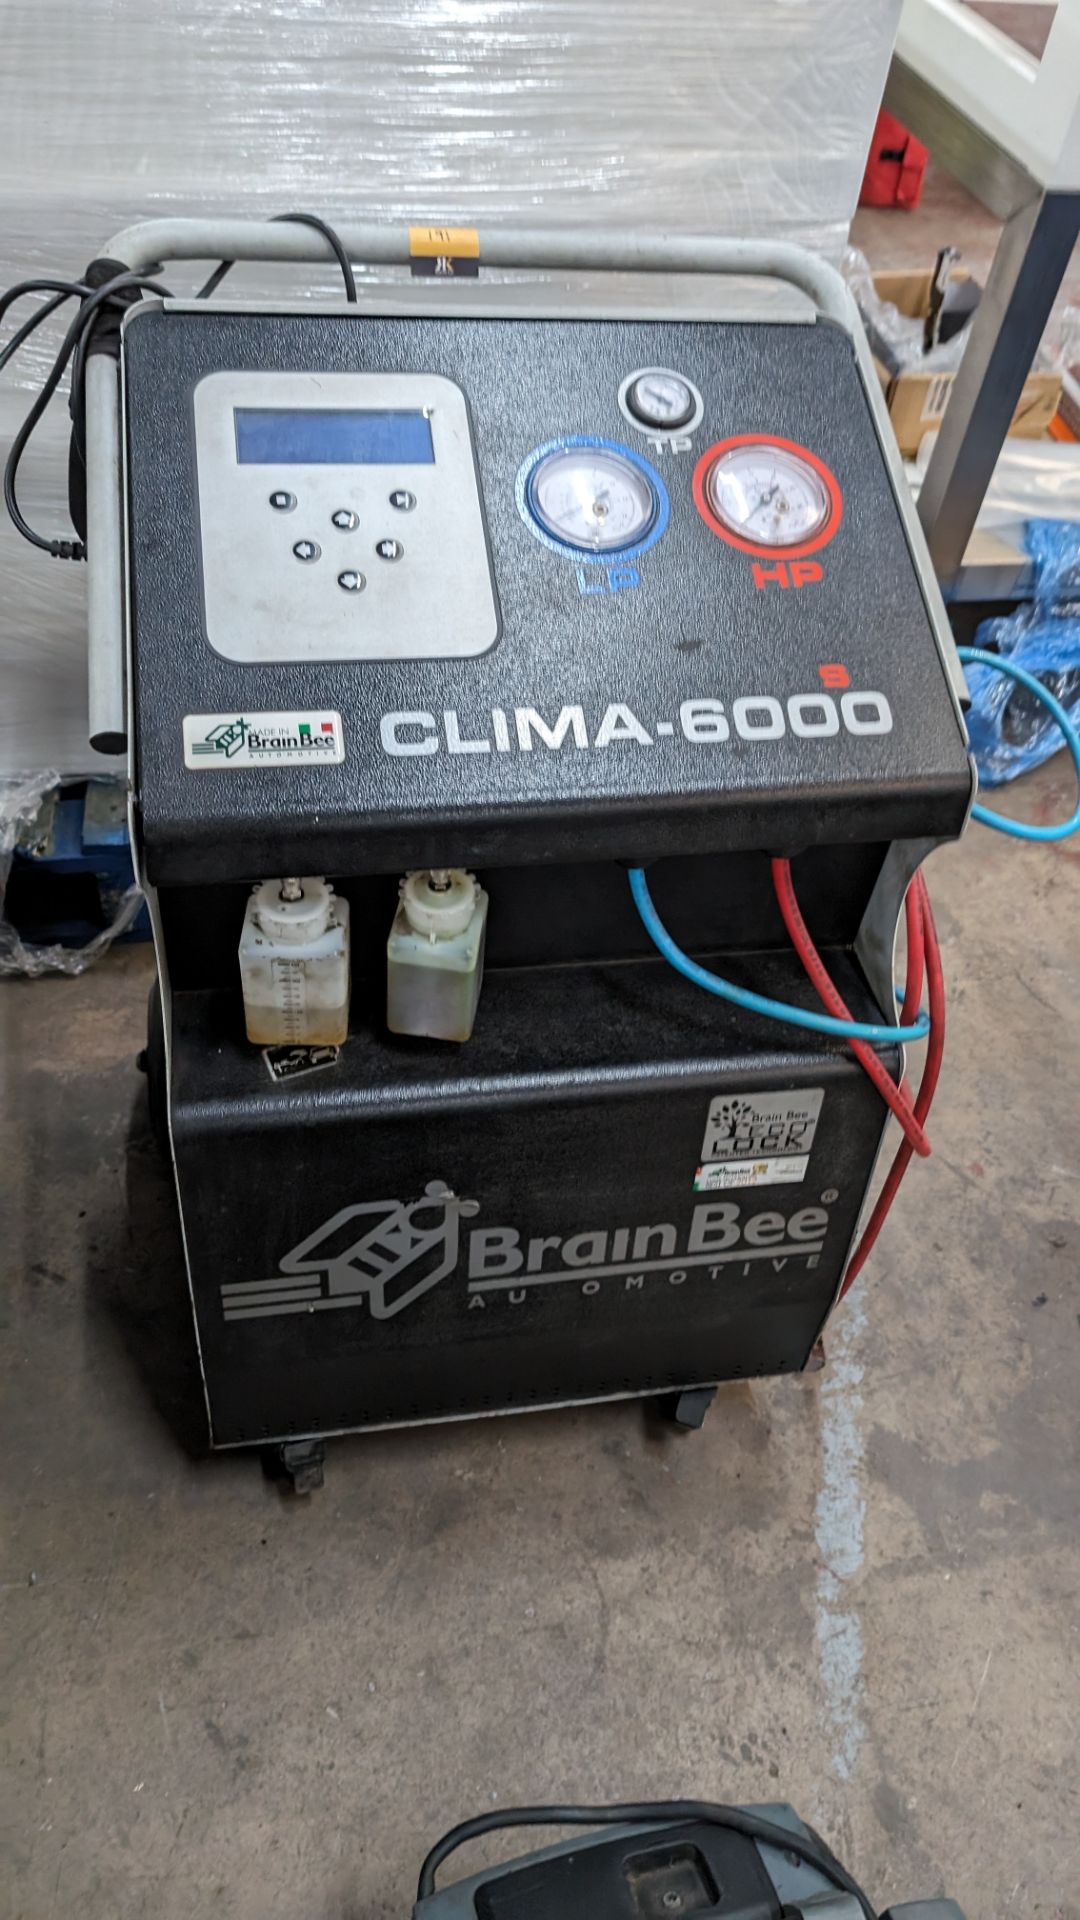 Brain Bee automotive clima-6000 aircon diagnostics device - Image 3 of 11